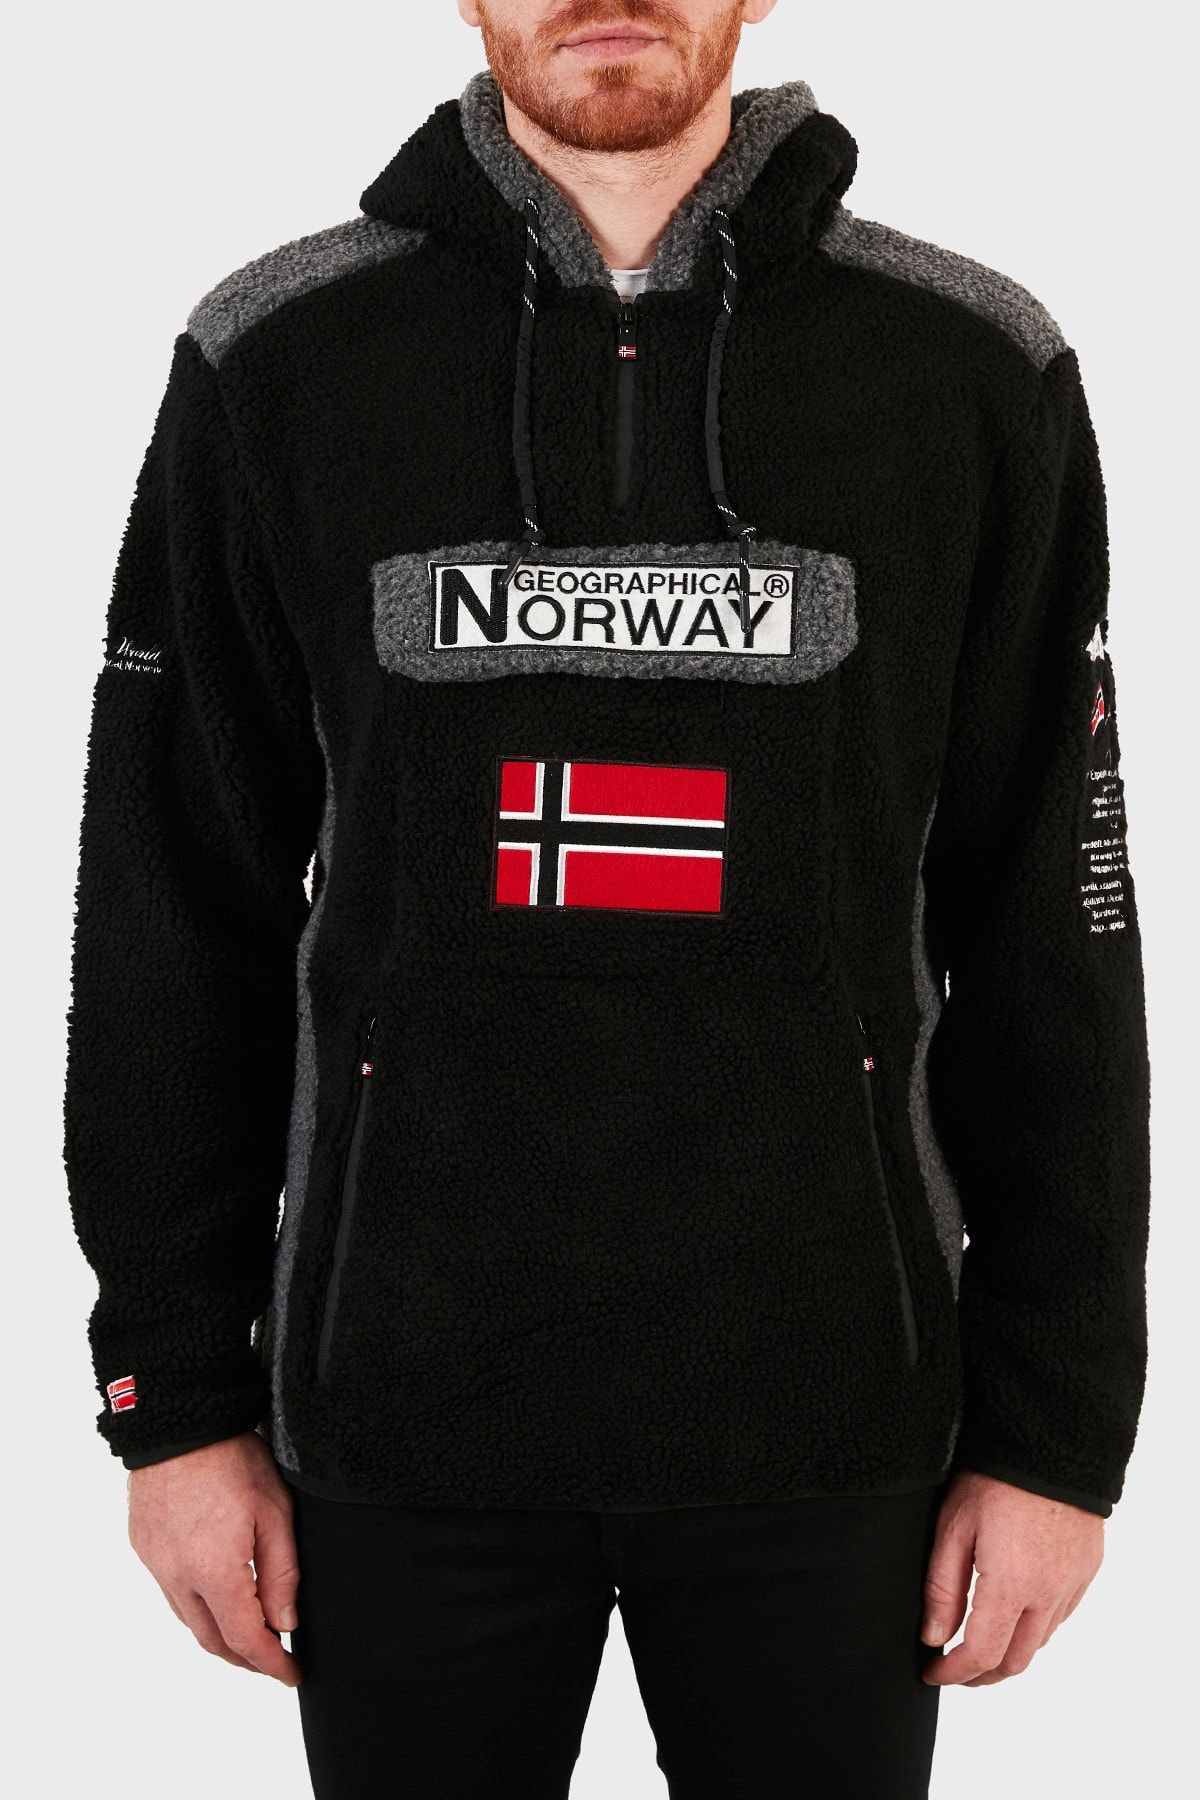 Norway Geographical Kapüşonlu Yarım Fermuarlı Outdoor Polar Sweat Erkek Sweat Gymclasssherpa